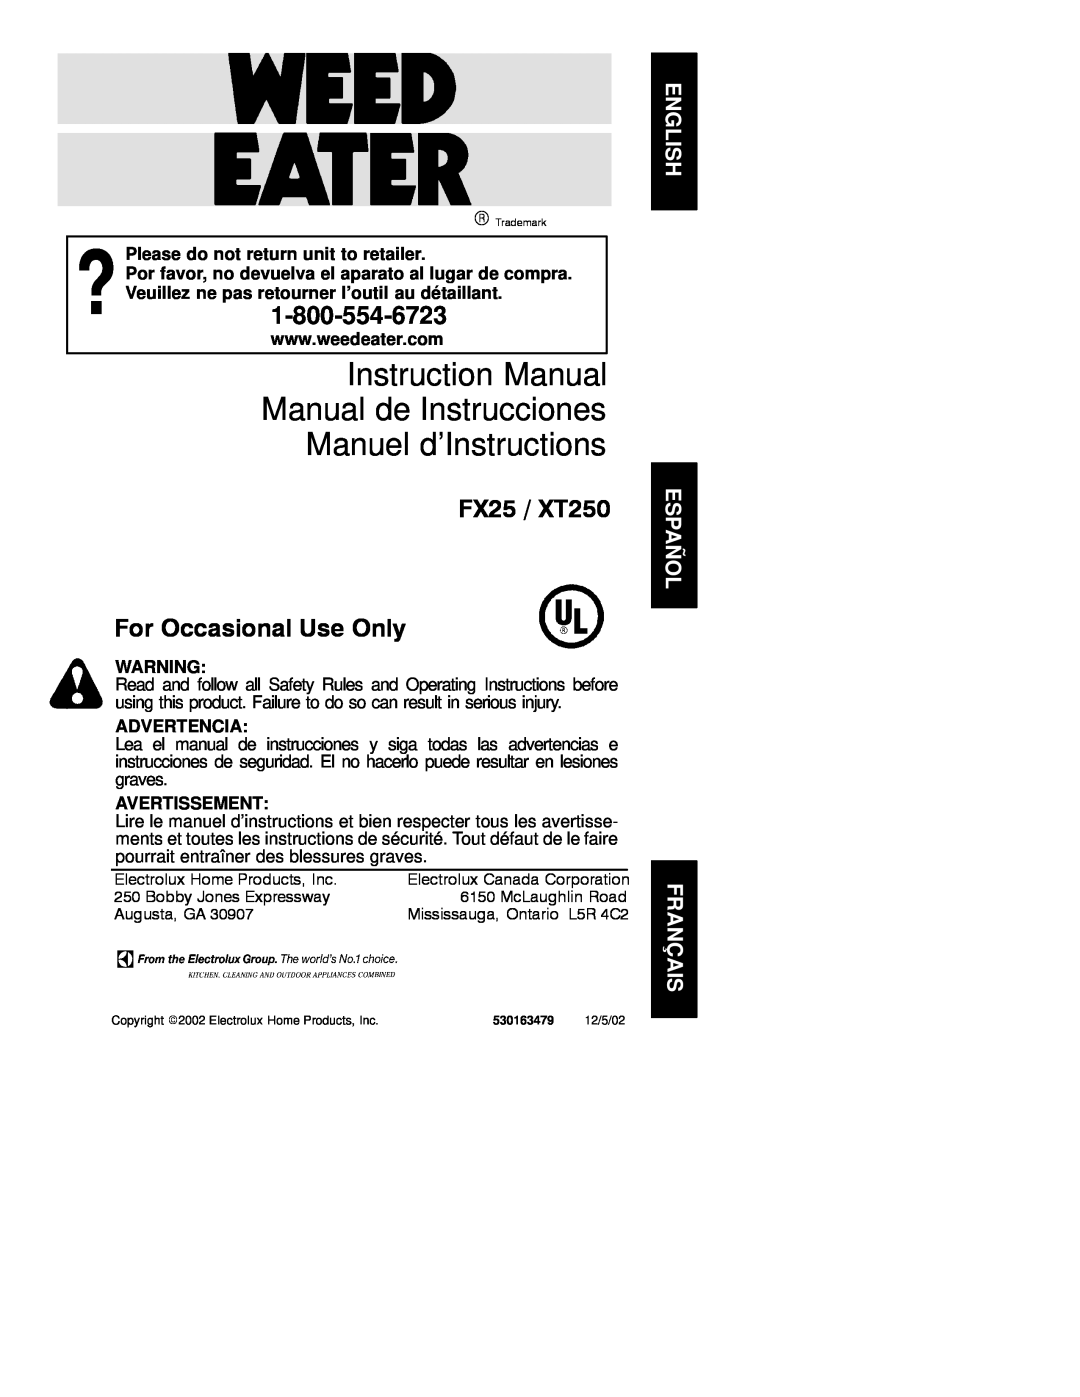 Weed Eater FX25, XT250 instruction manual Please do not return unit to retailer, Advertencia, Avertissement 